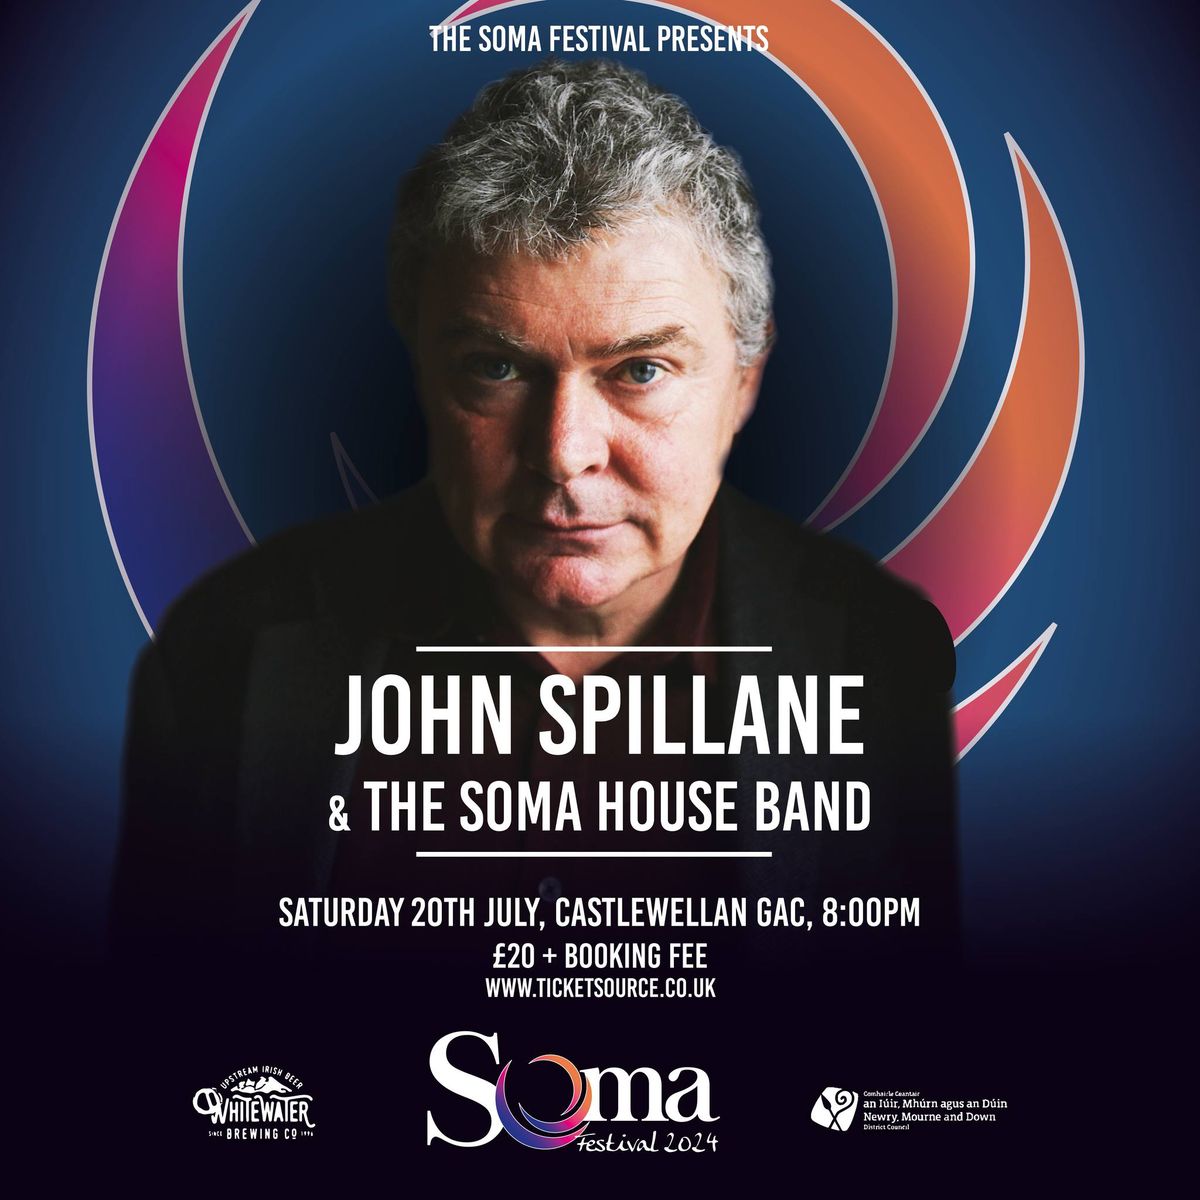 The Soma Festival Presents: John Spillane & The Soma House Band